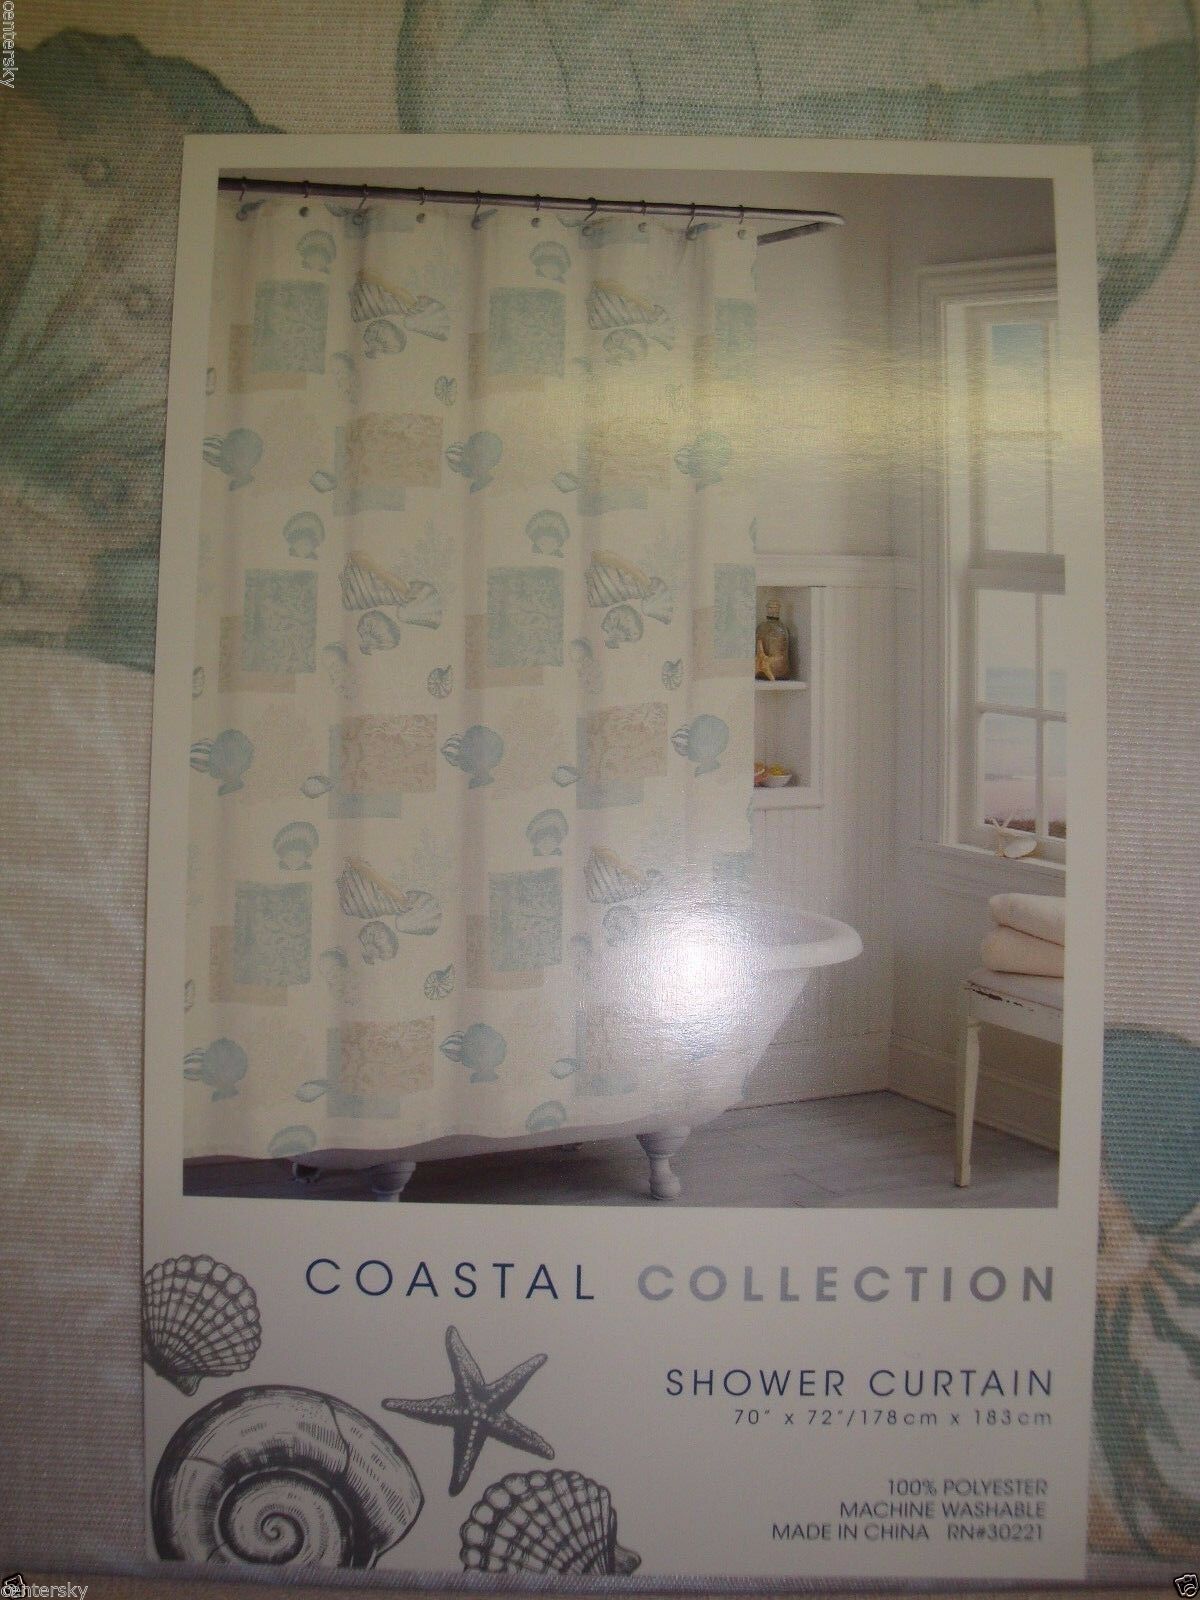 New Coastal Collection Shower Curtain 70 x 72" Seashell Theme Beige/Green/Tan - $39.59